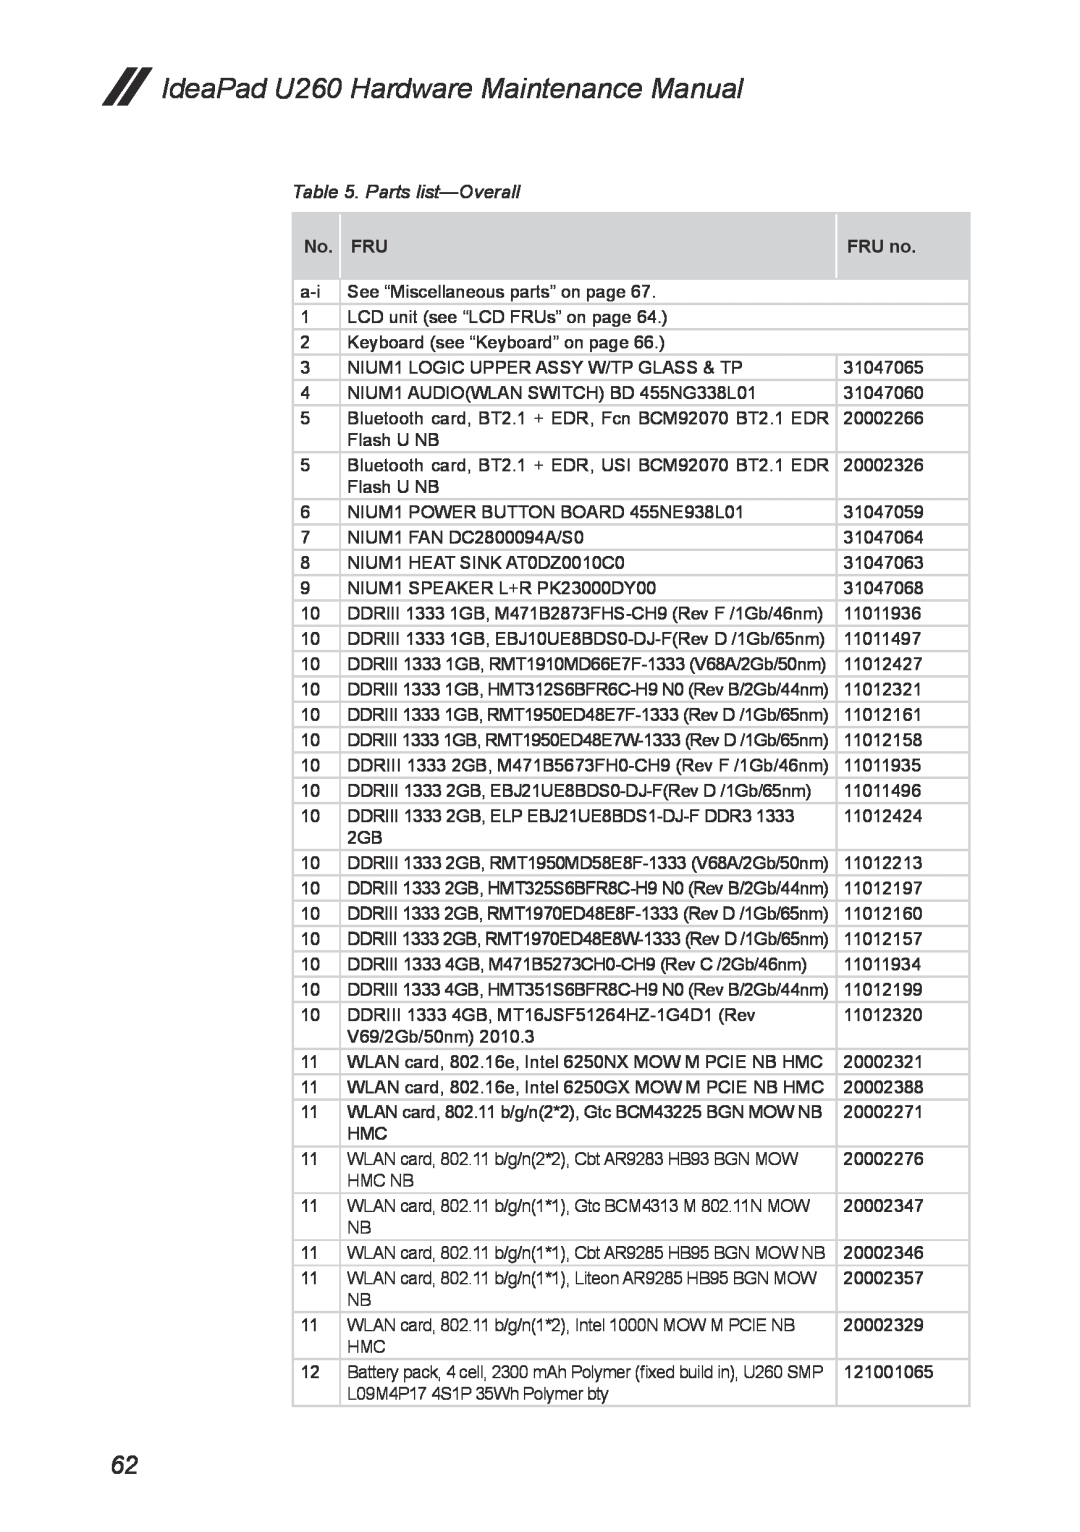 Lenovo manual Parts list-Overall, IdeaPad U260 Hardware Maintenance Manual, No. FRU, FRU no 